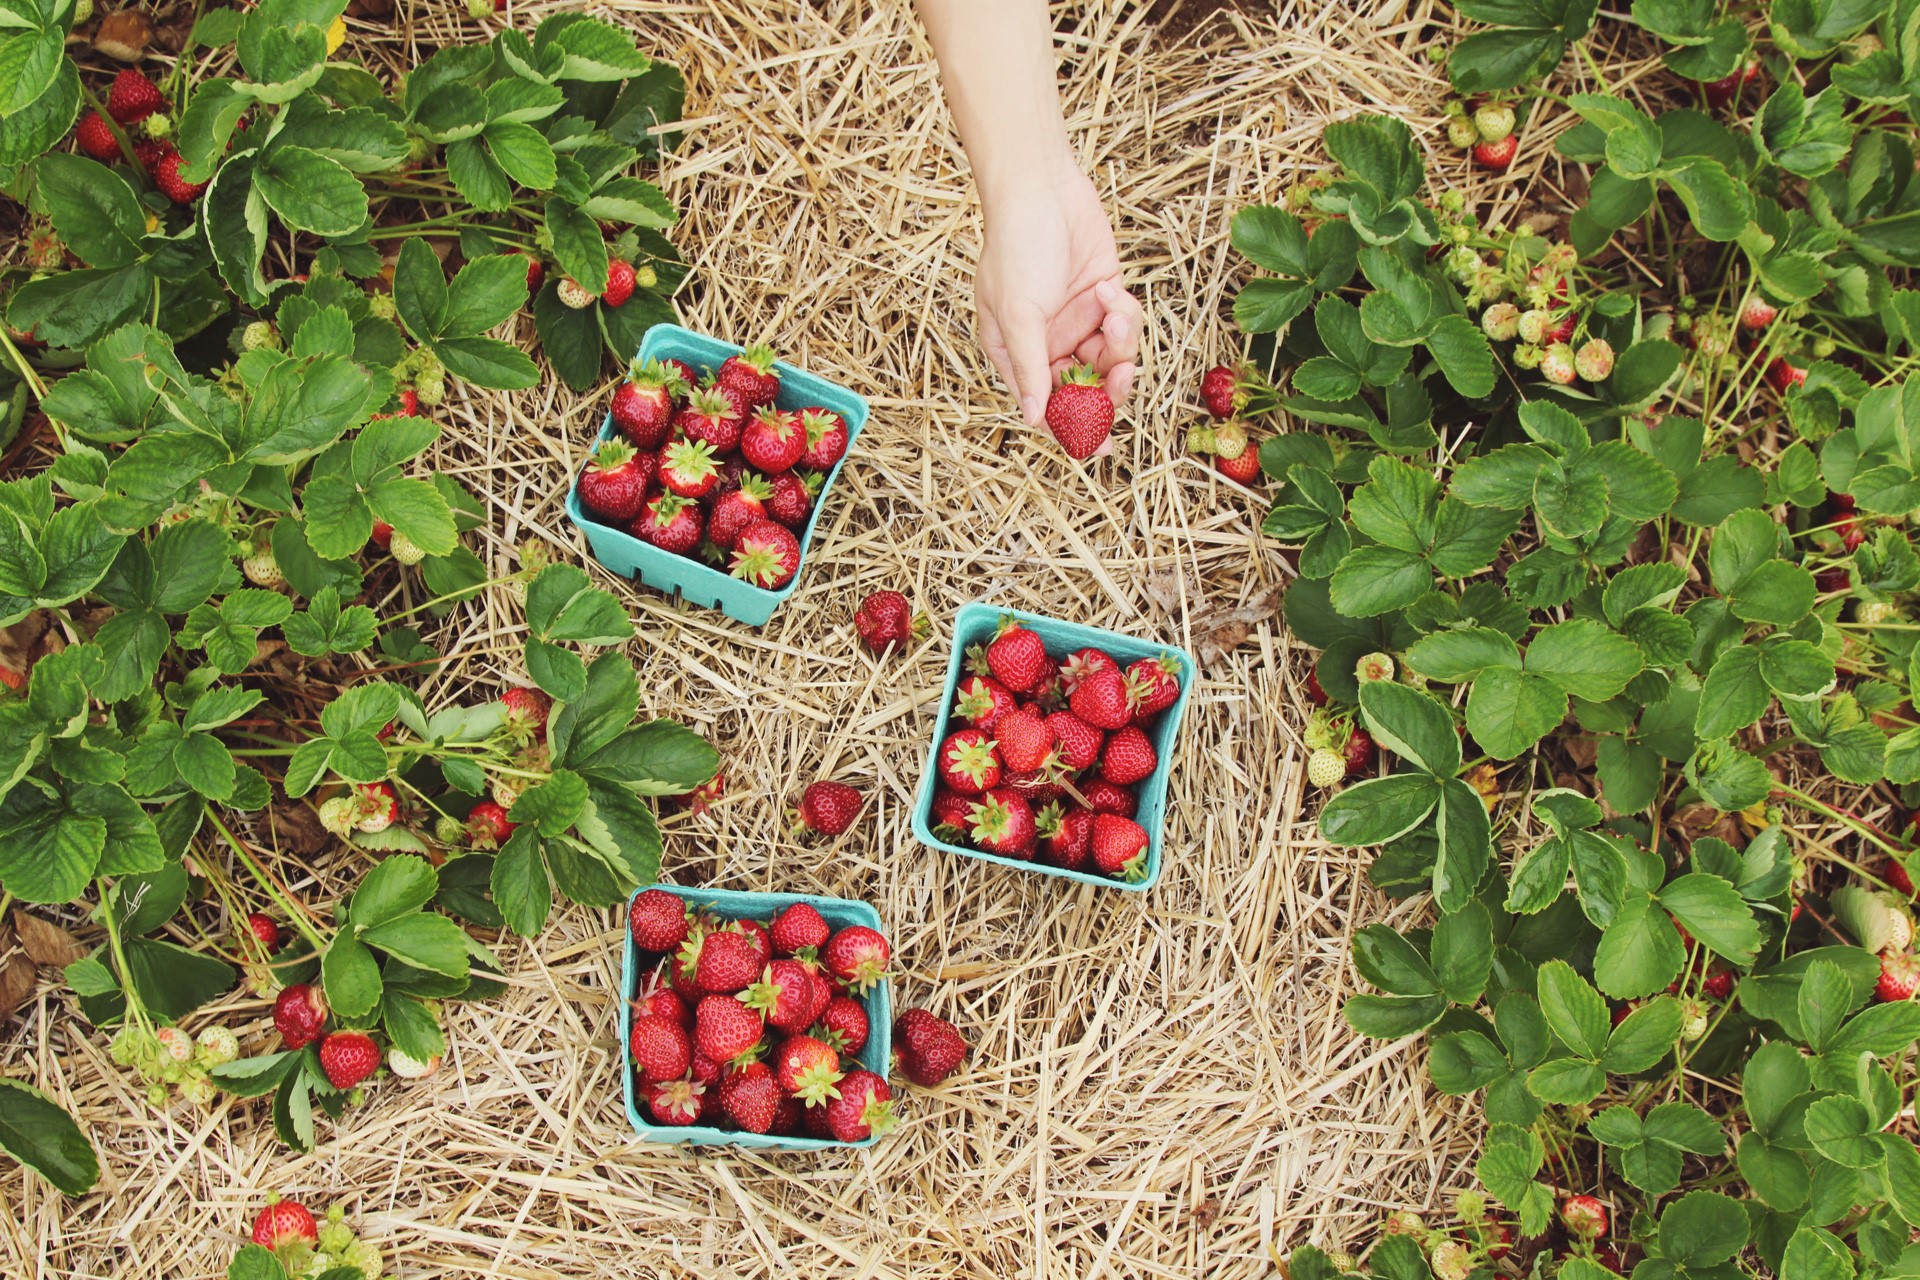 Strawberries being picked